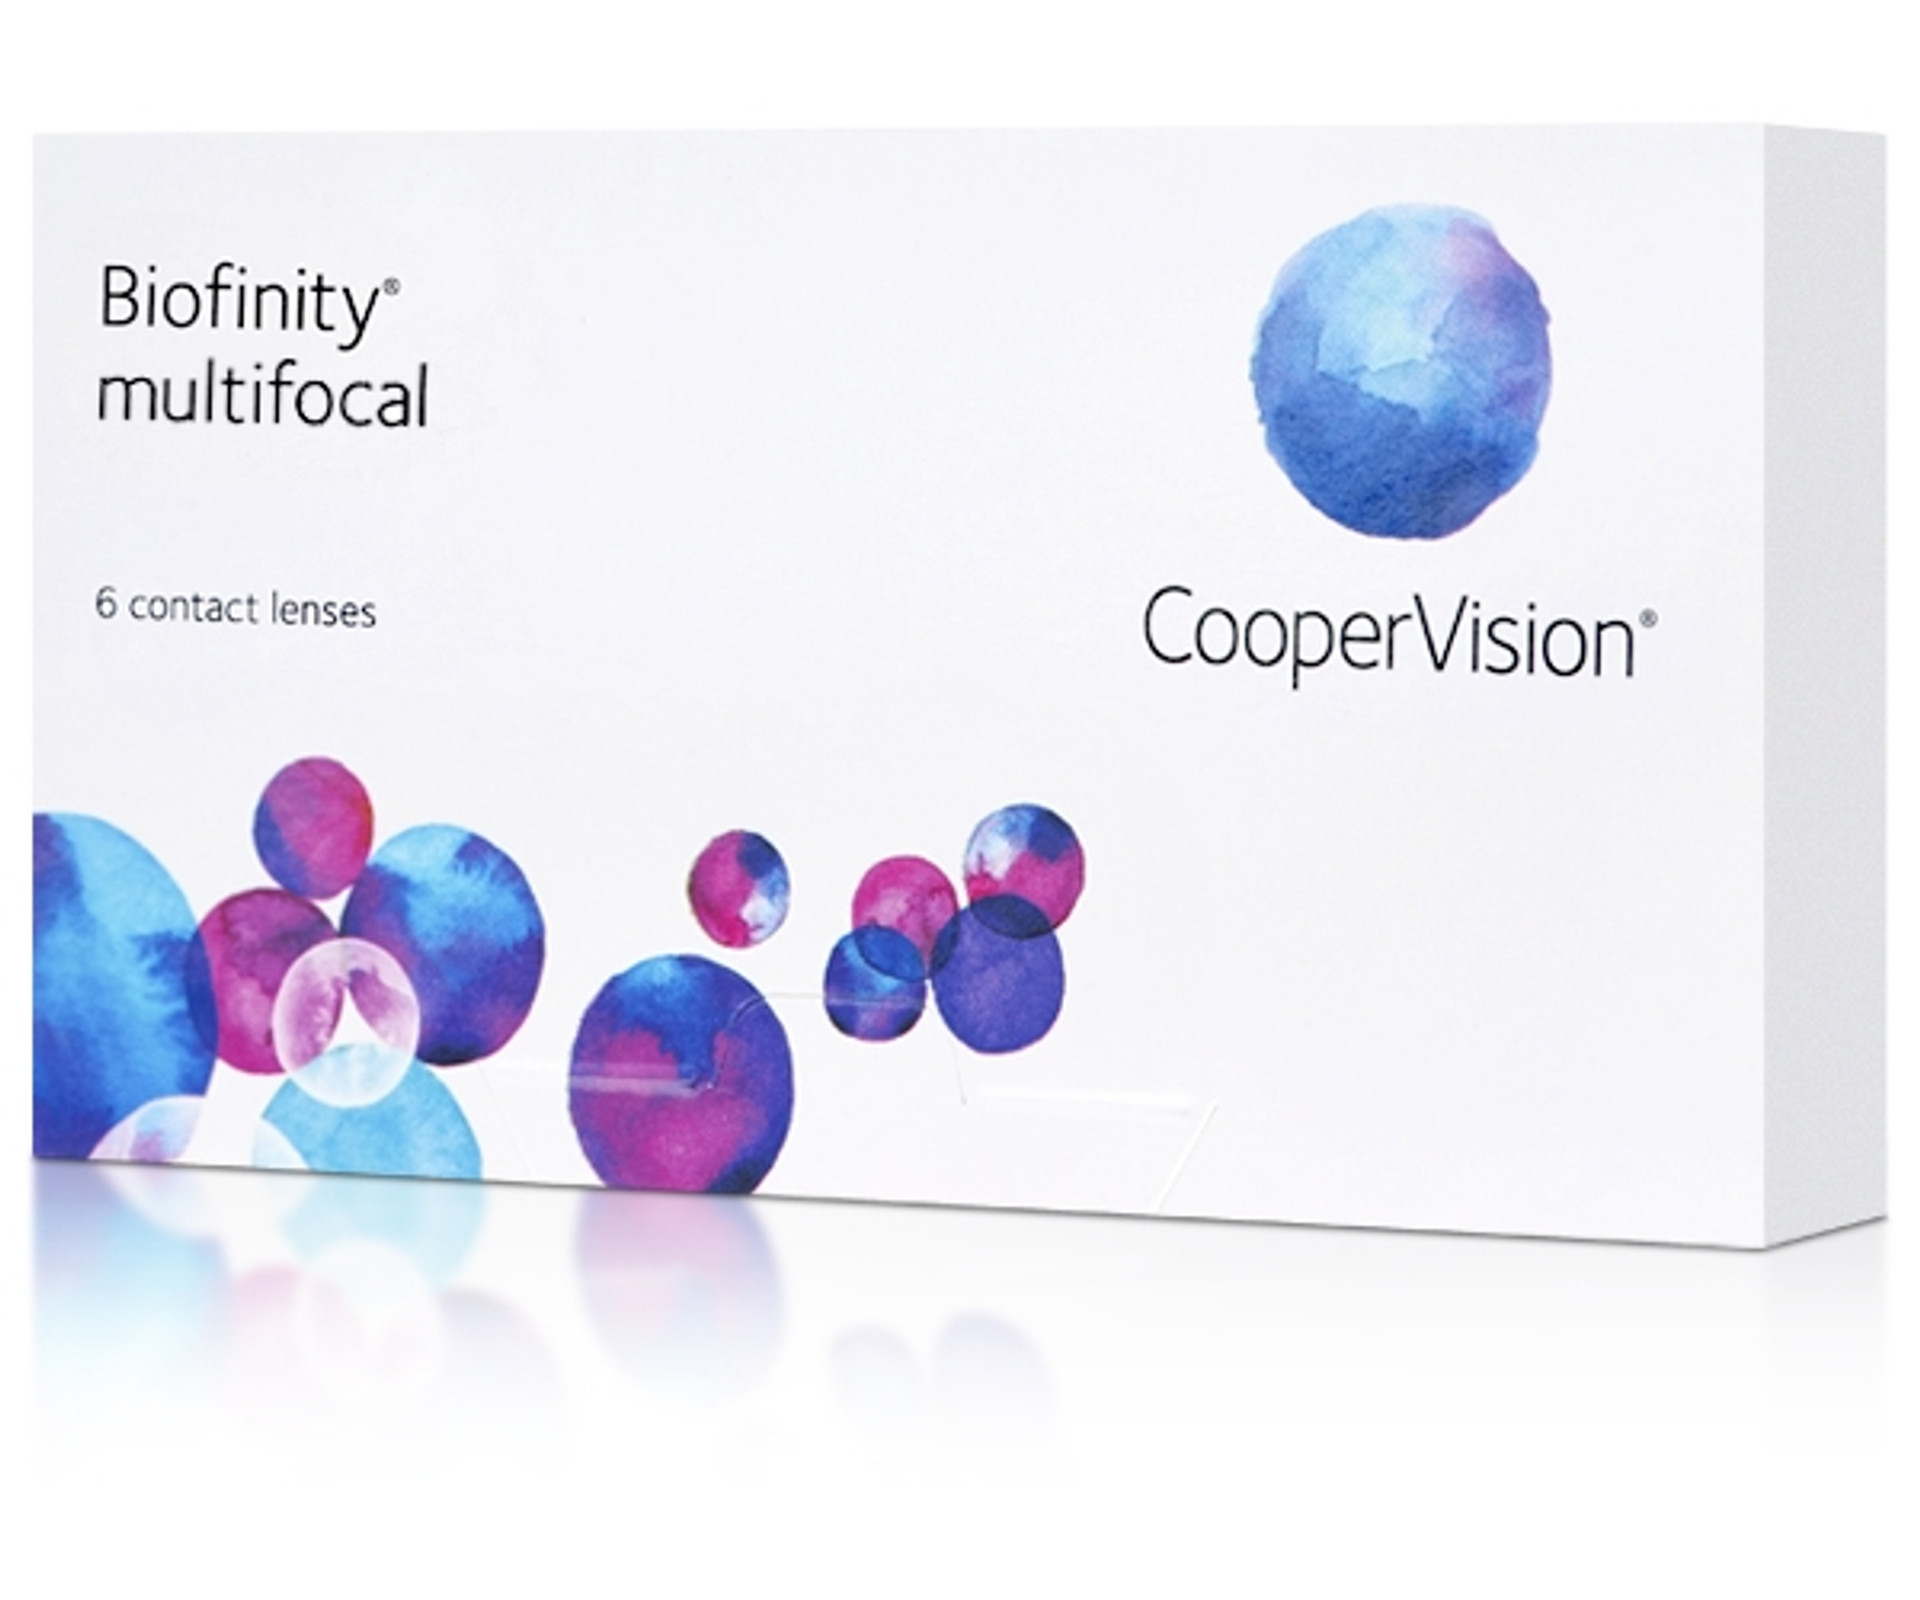 biofinity-multifocal-contact-lenses-fsa-store-optical